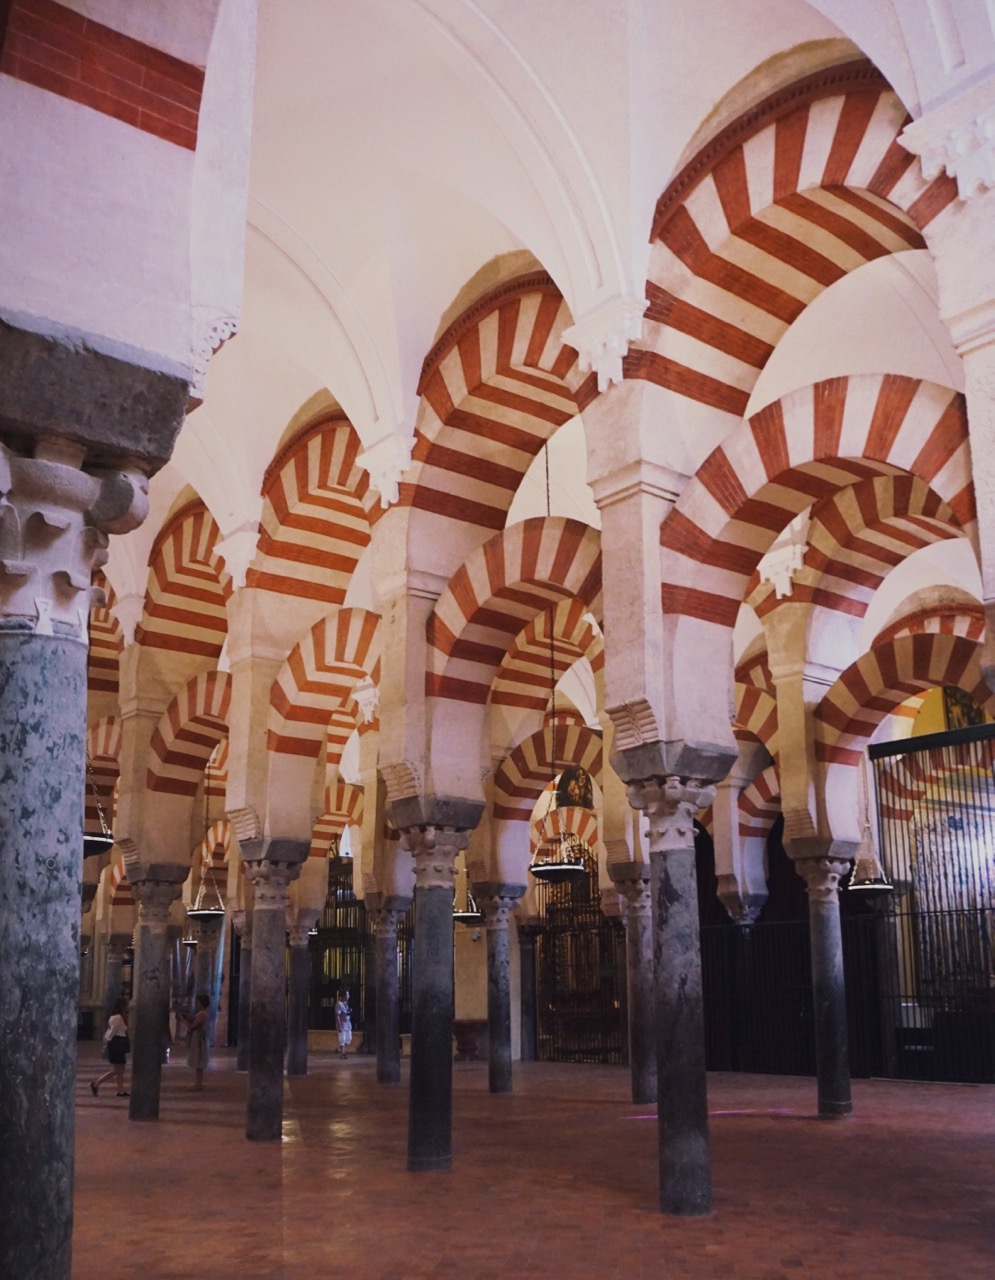 Mezquita, Córdoba, Spain